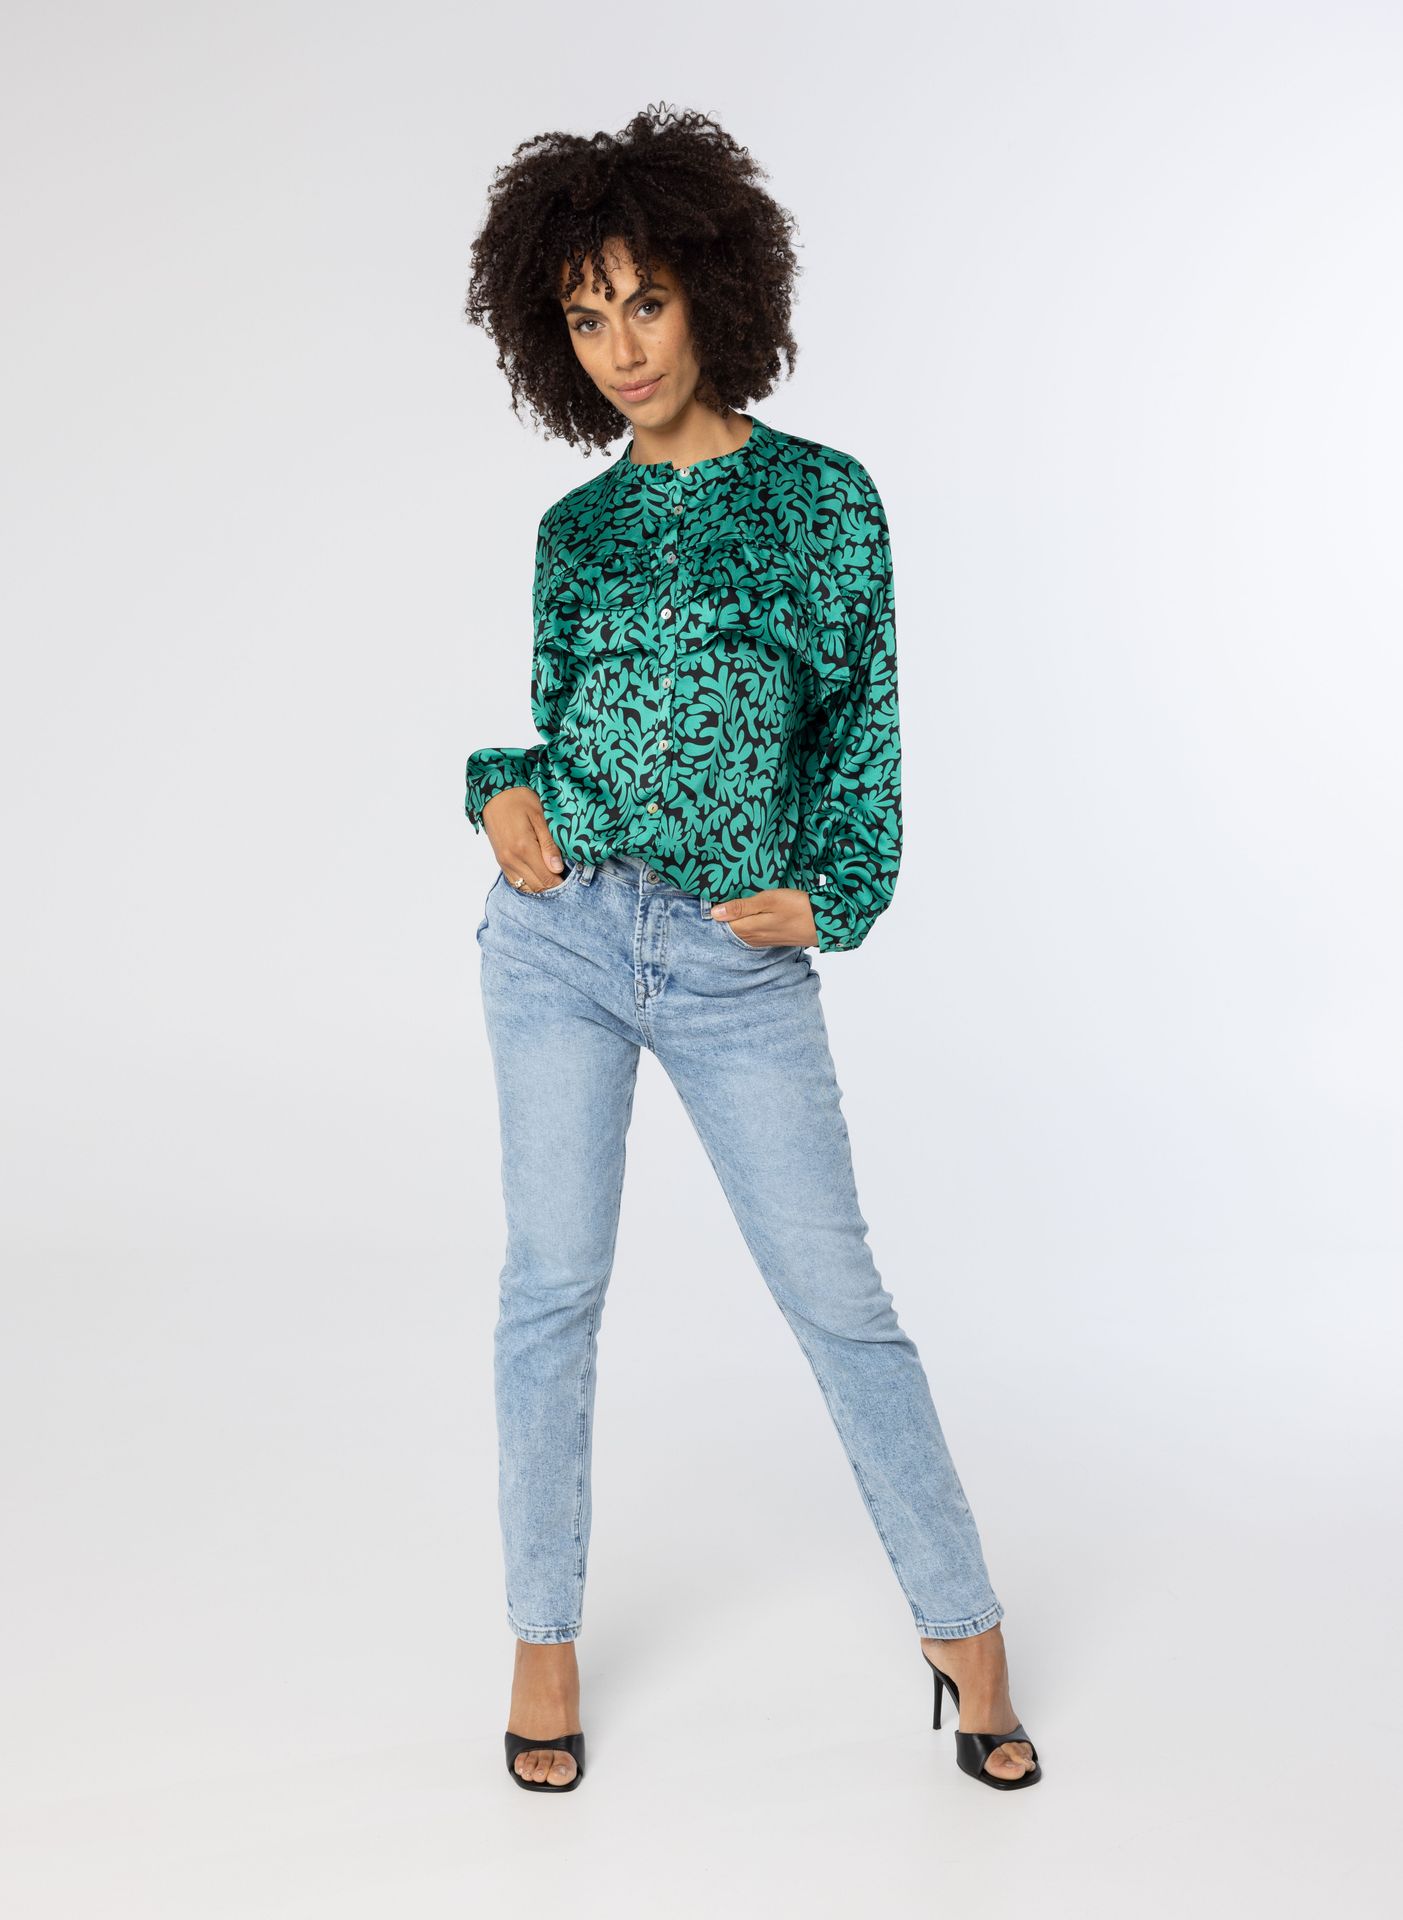 Norah Groene blouse green/black 214083-530